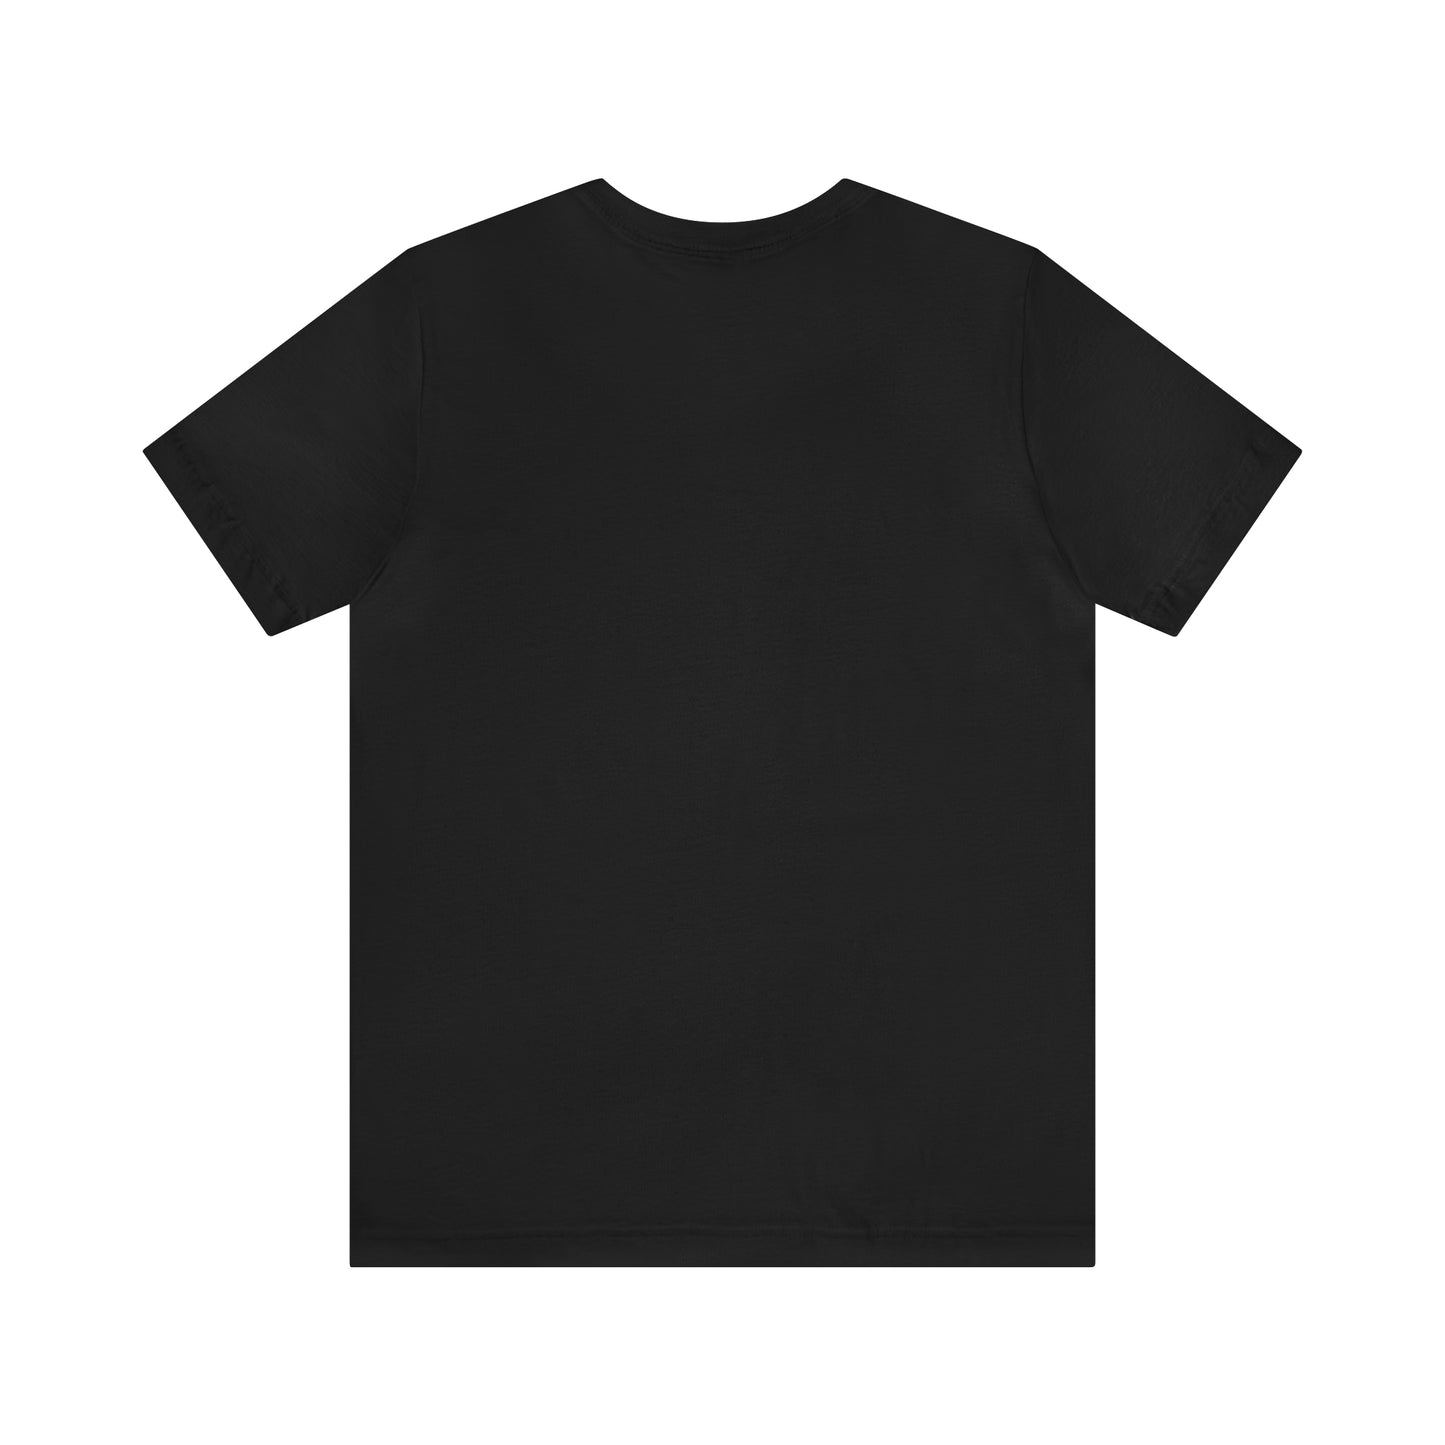 Unisex Satoshi Artist Jersey Short Sleeve T-shirt